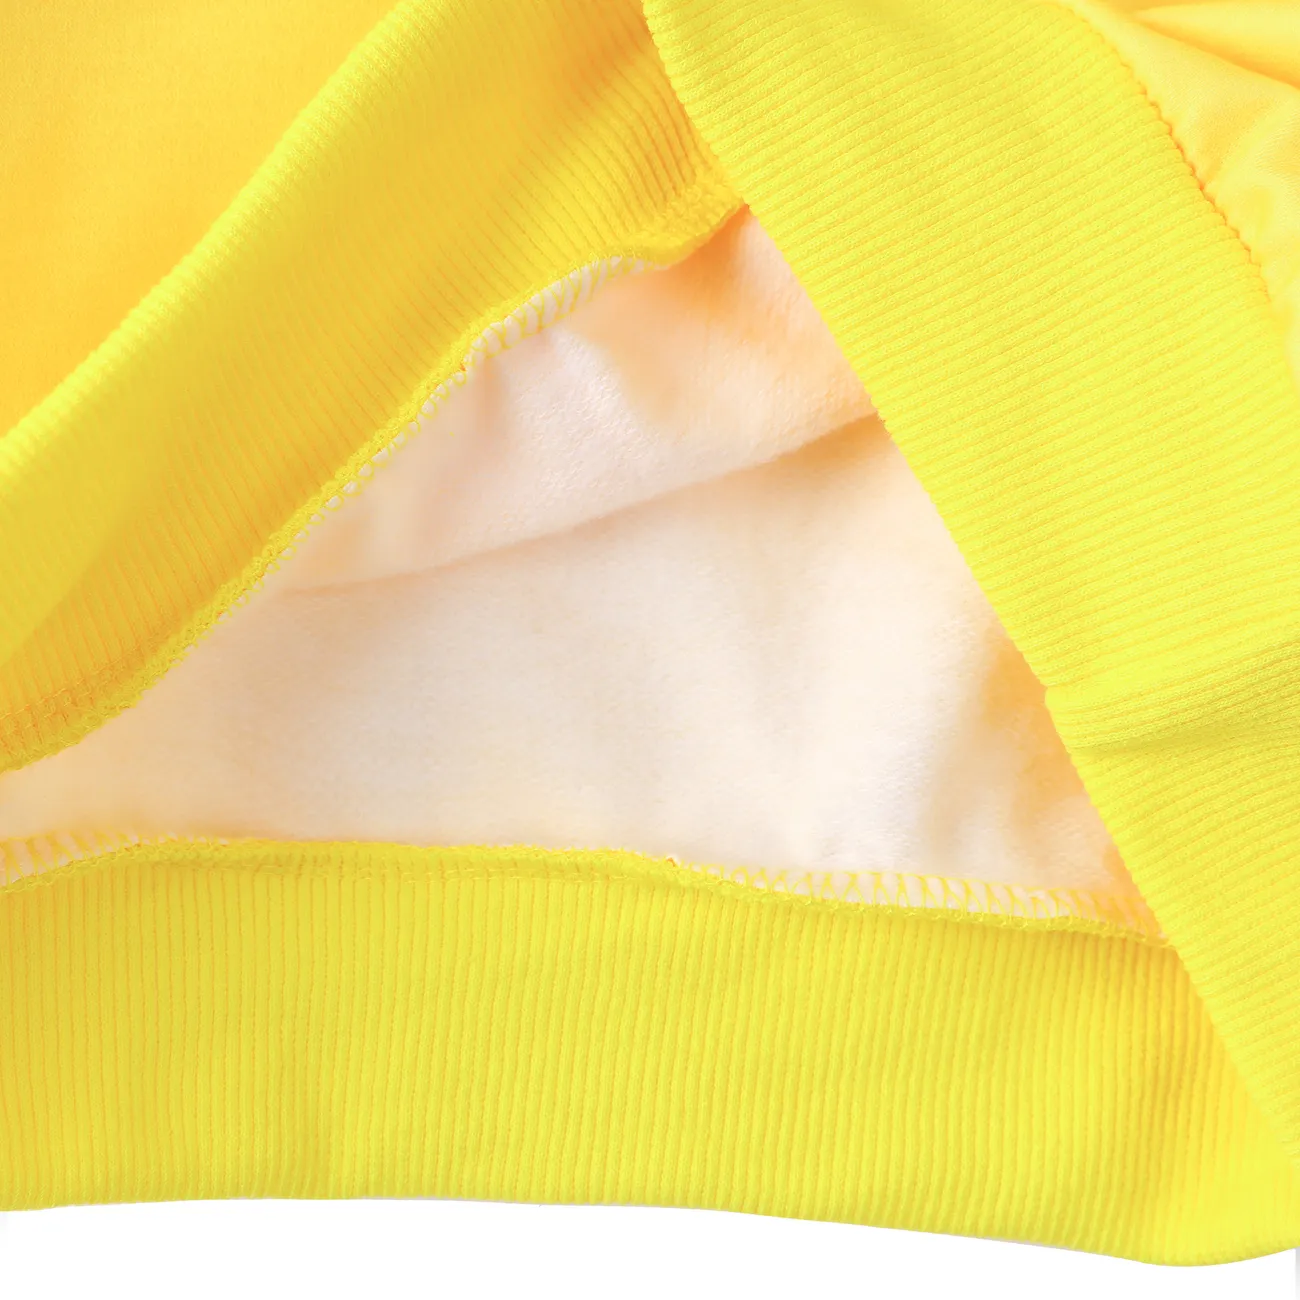 Looney Tunes Toddler/Kid Boys/Girls Character Print Long-sleeve Hooded Sweatshirt  Yellow big image 1